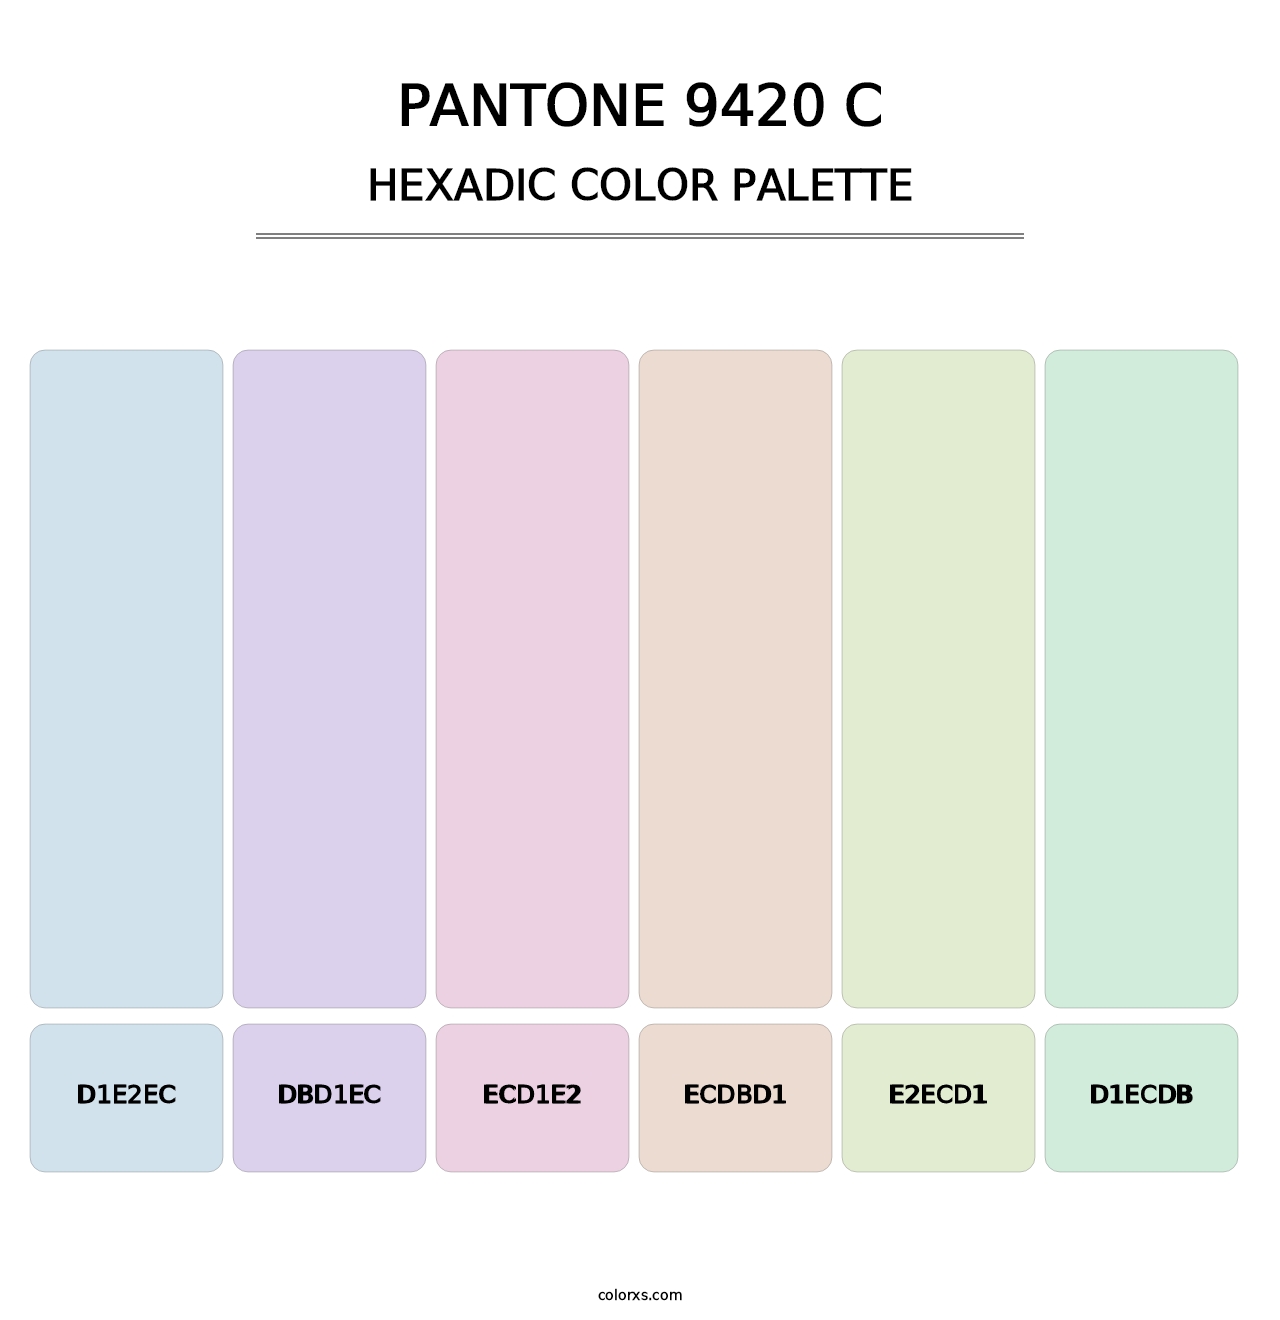 PANTONE 9420 C - Hexadic Color Palette